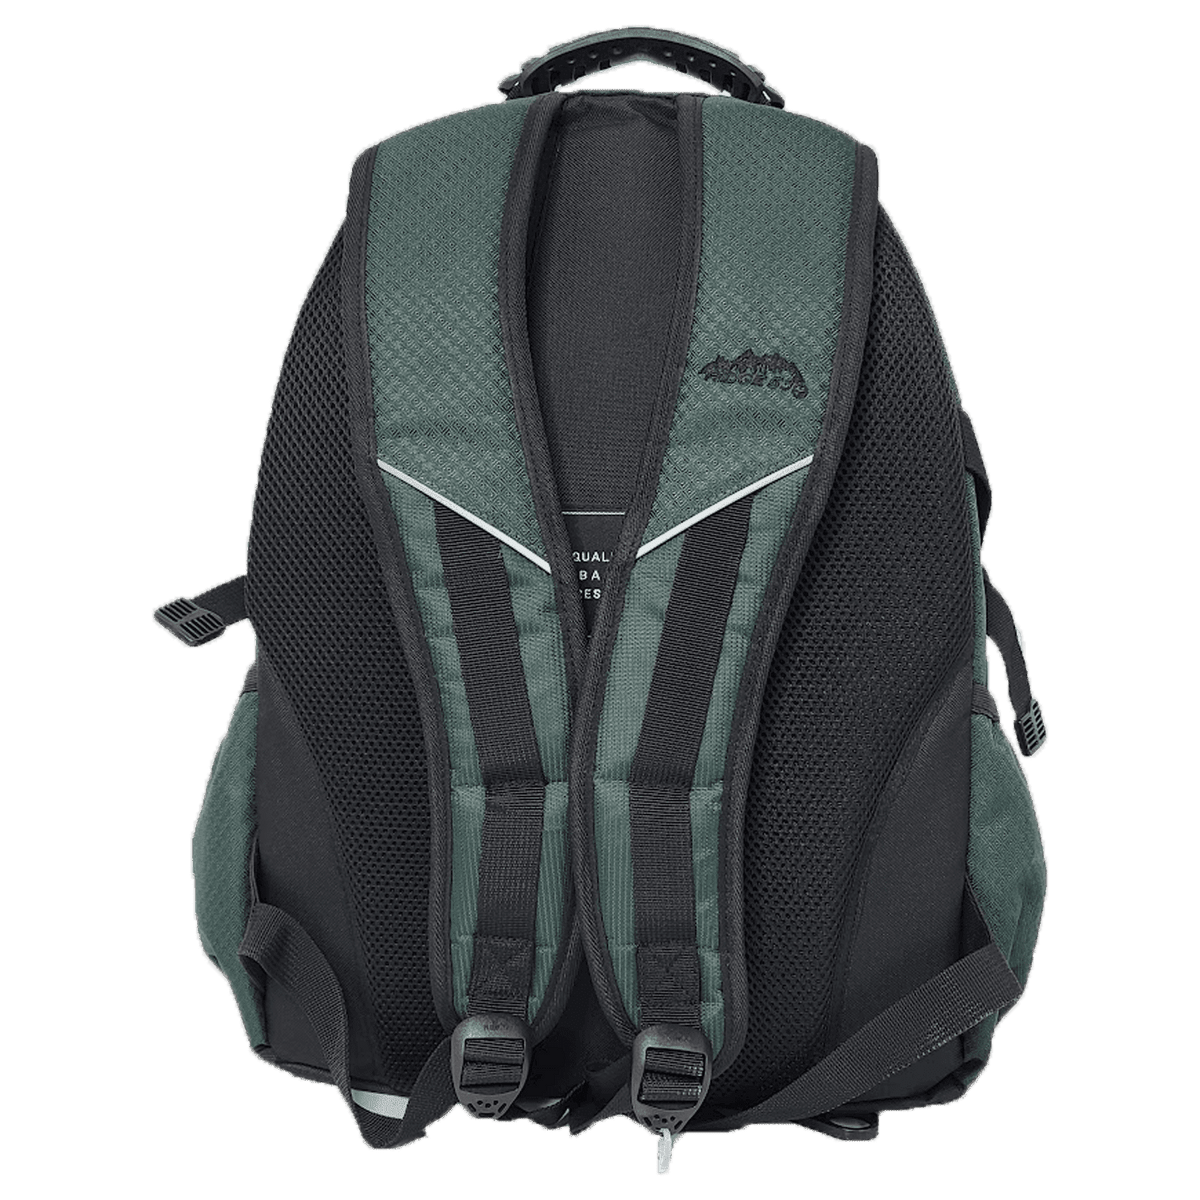 Ridge 53 – Bolton Backpack - Racing Green